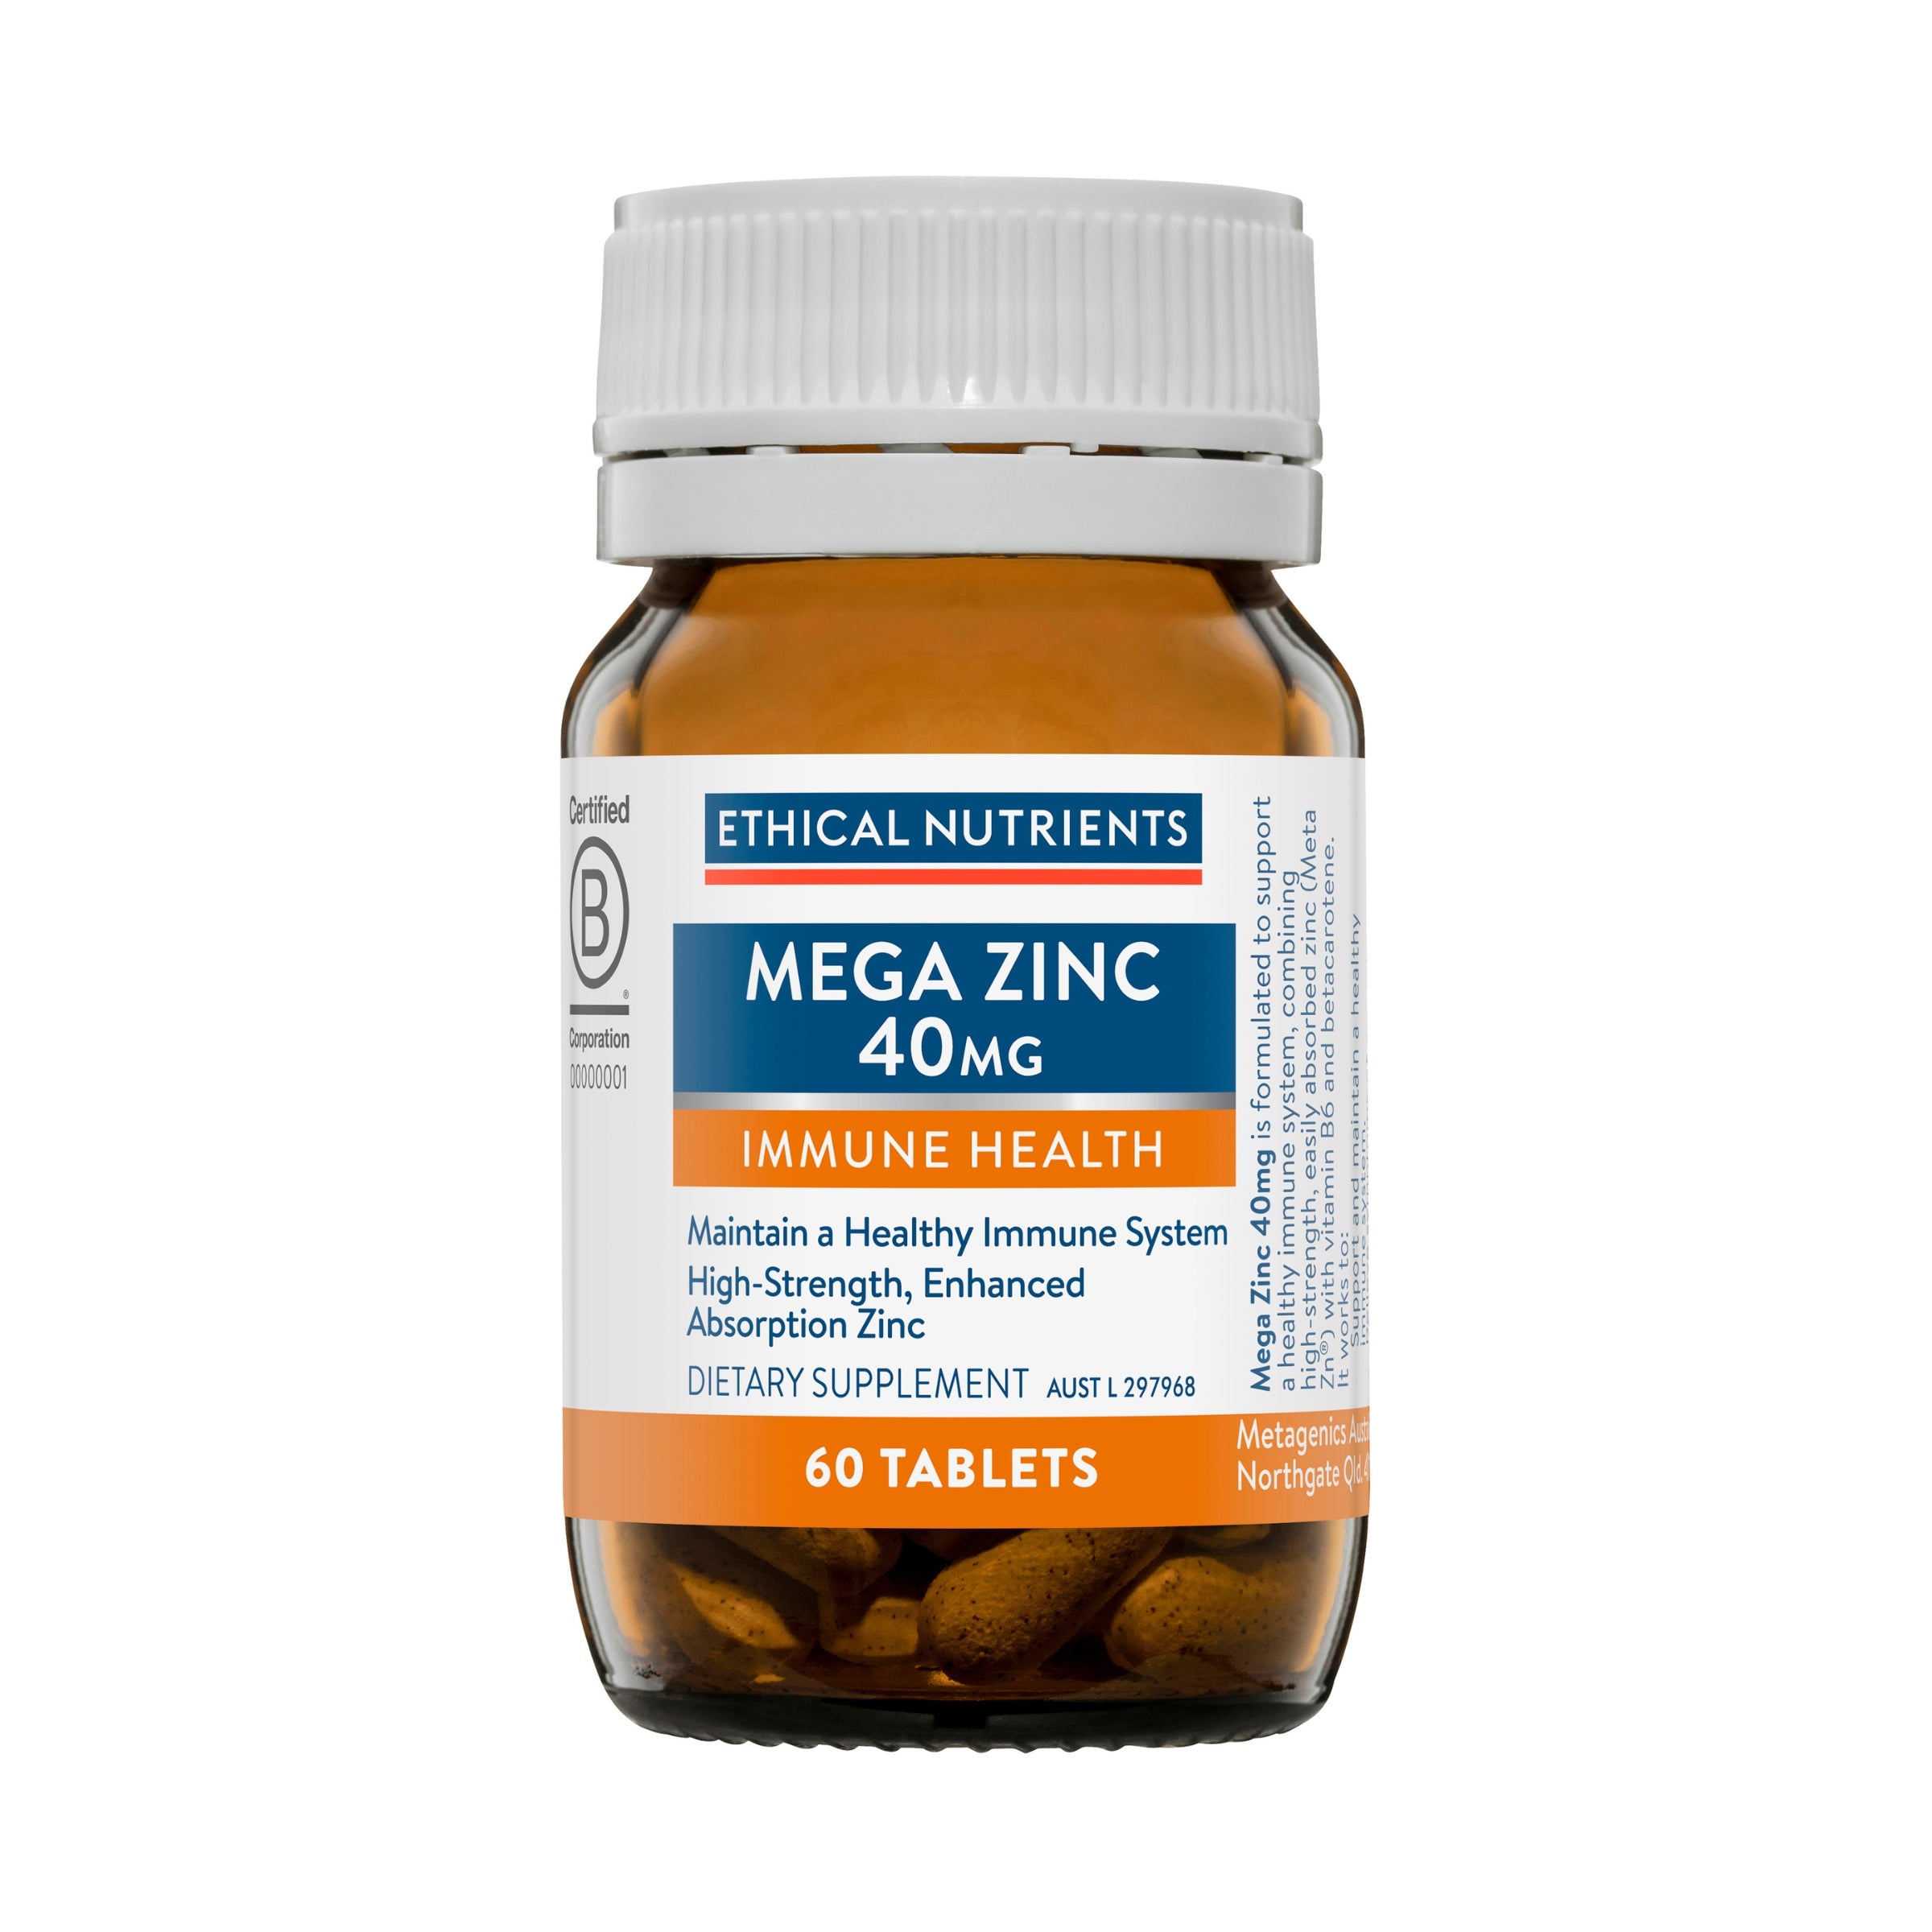 Ethical Nutrients Mega Zinc 40mg 60 Tablets #size_60 tablets